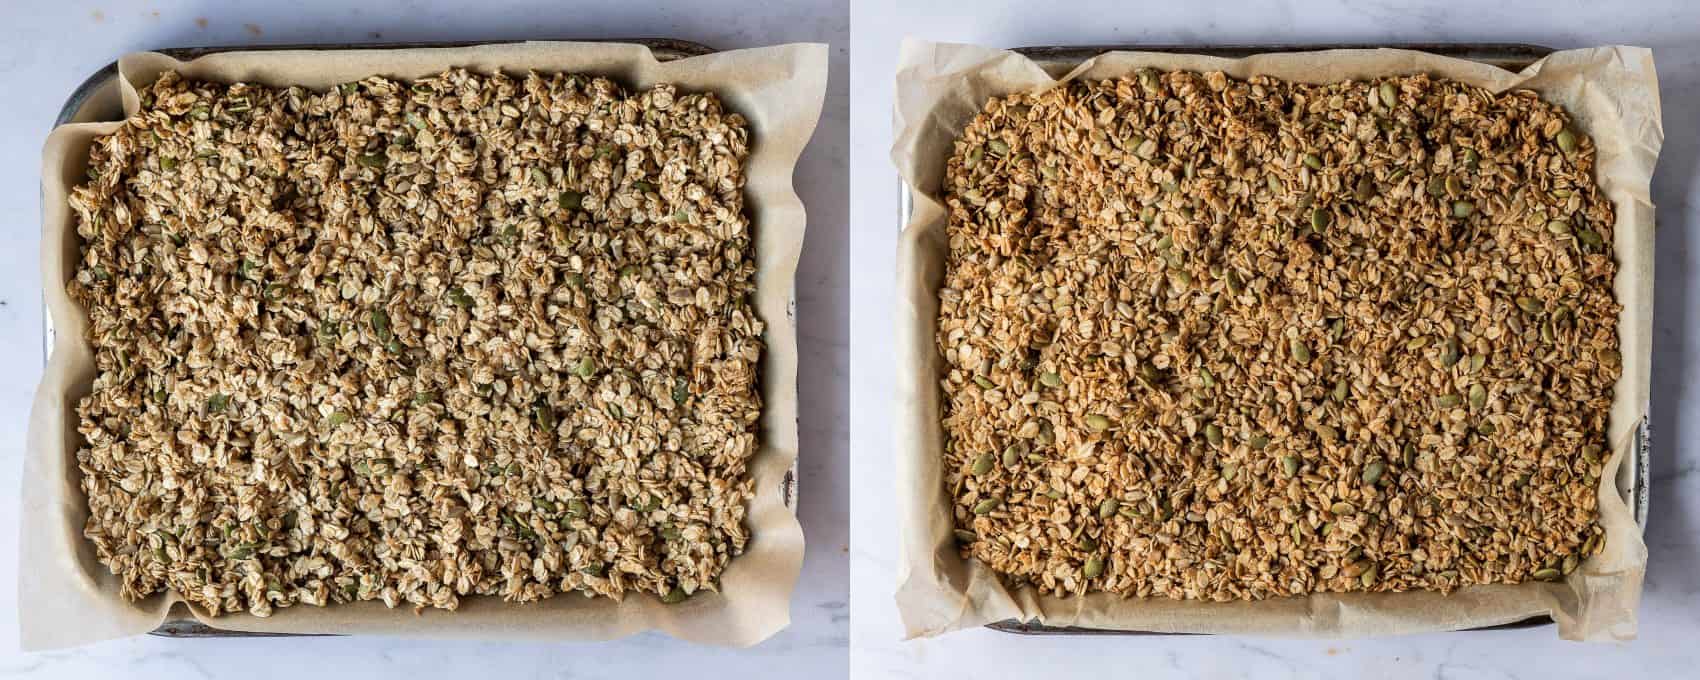 step 2 - baking the granola